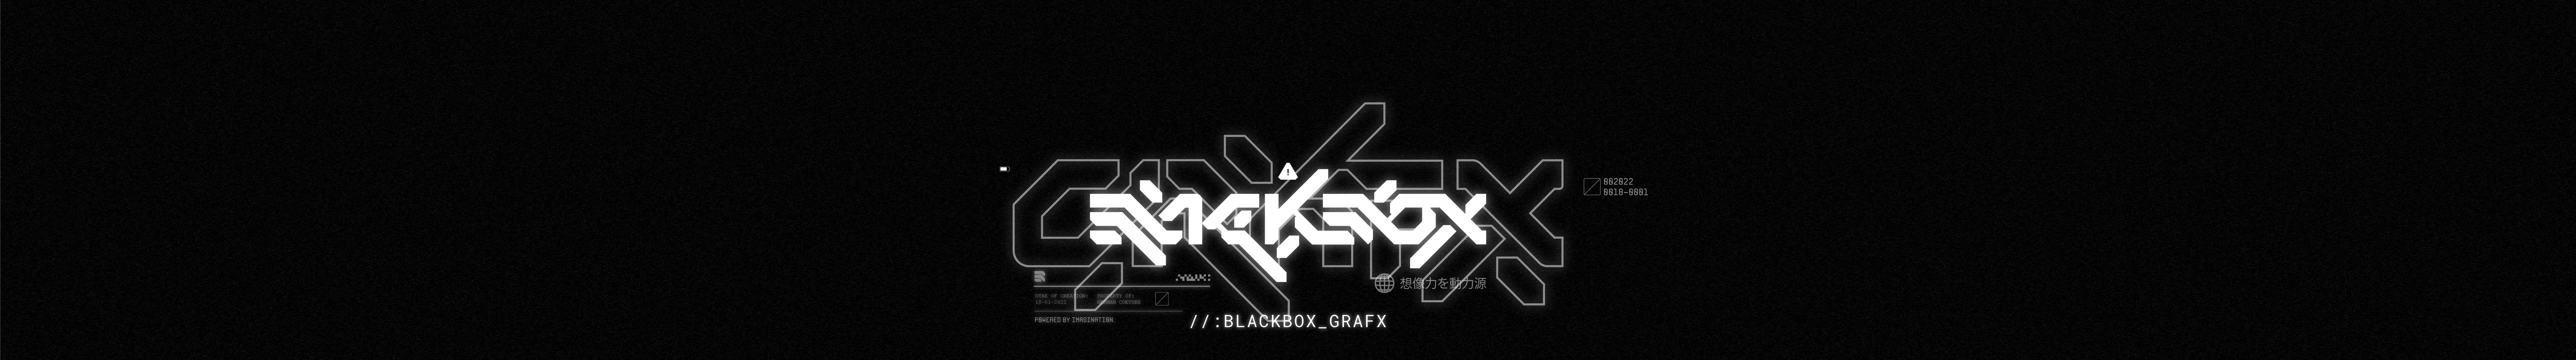 BLACKBOX GRAFX's profile banner